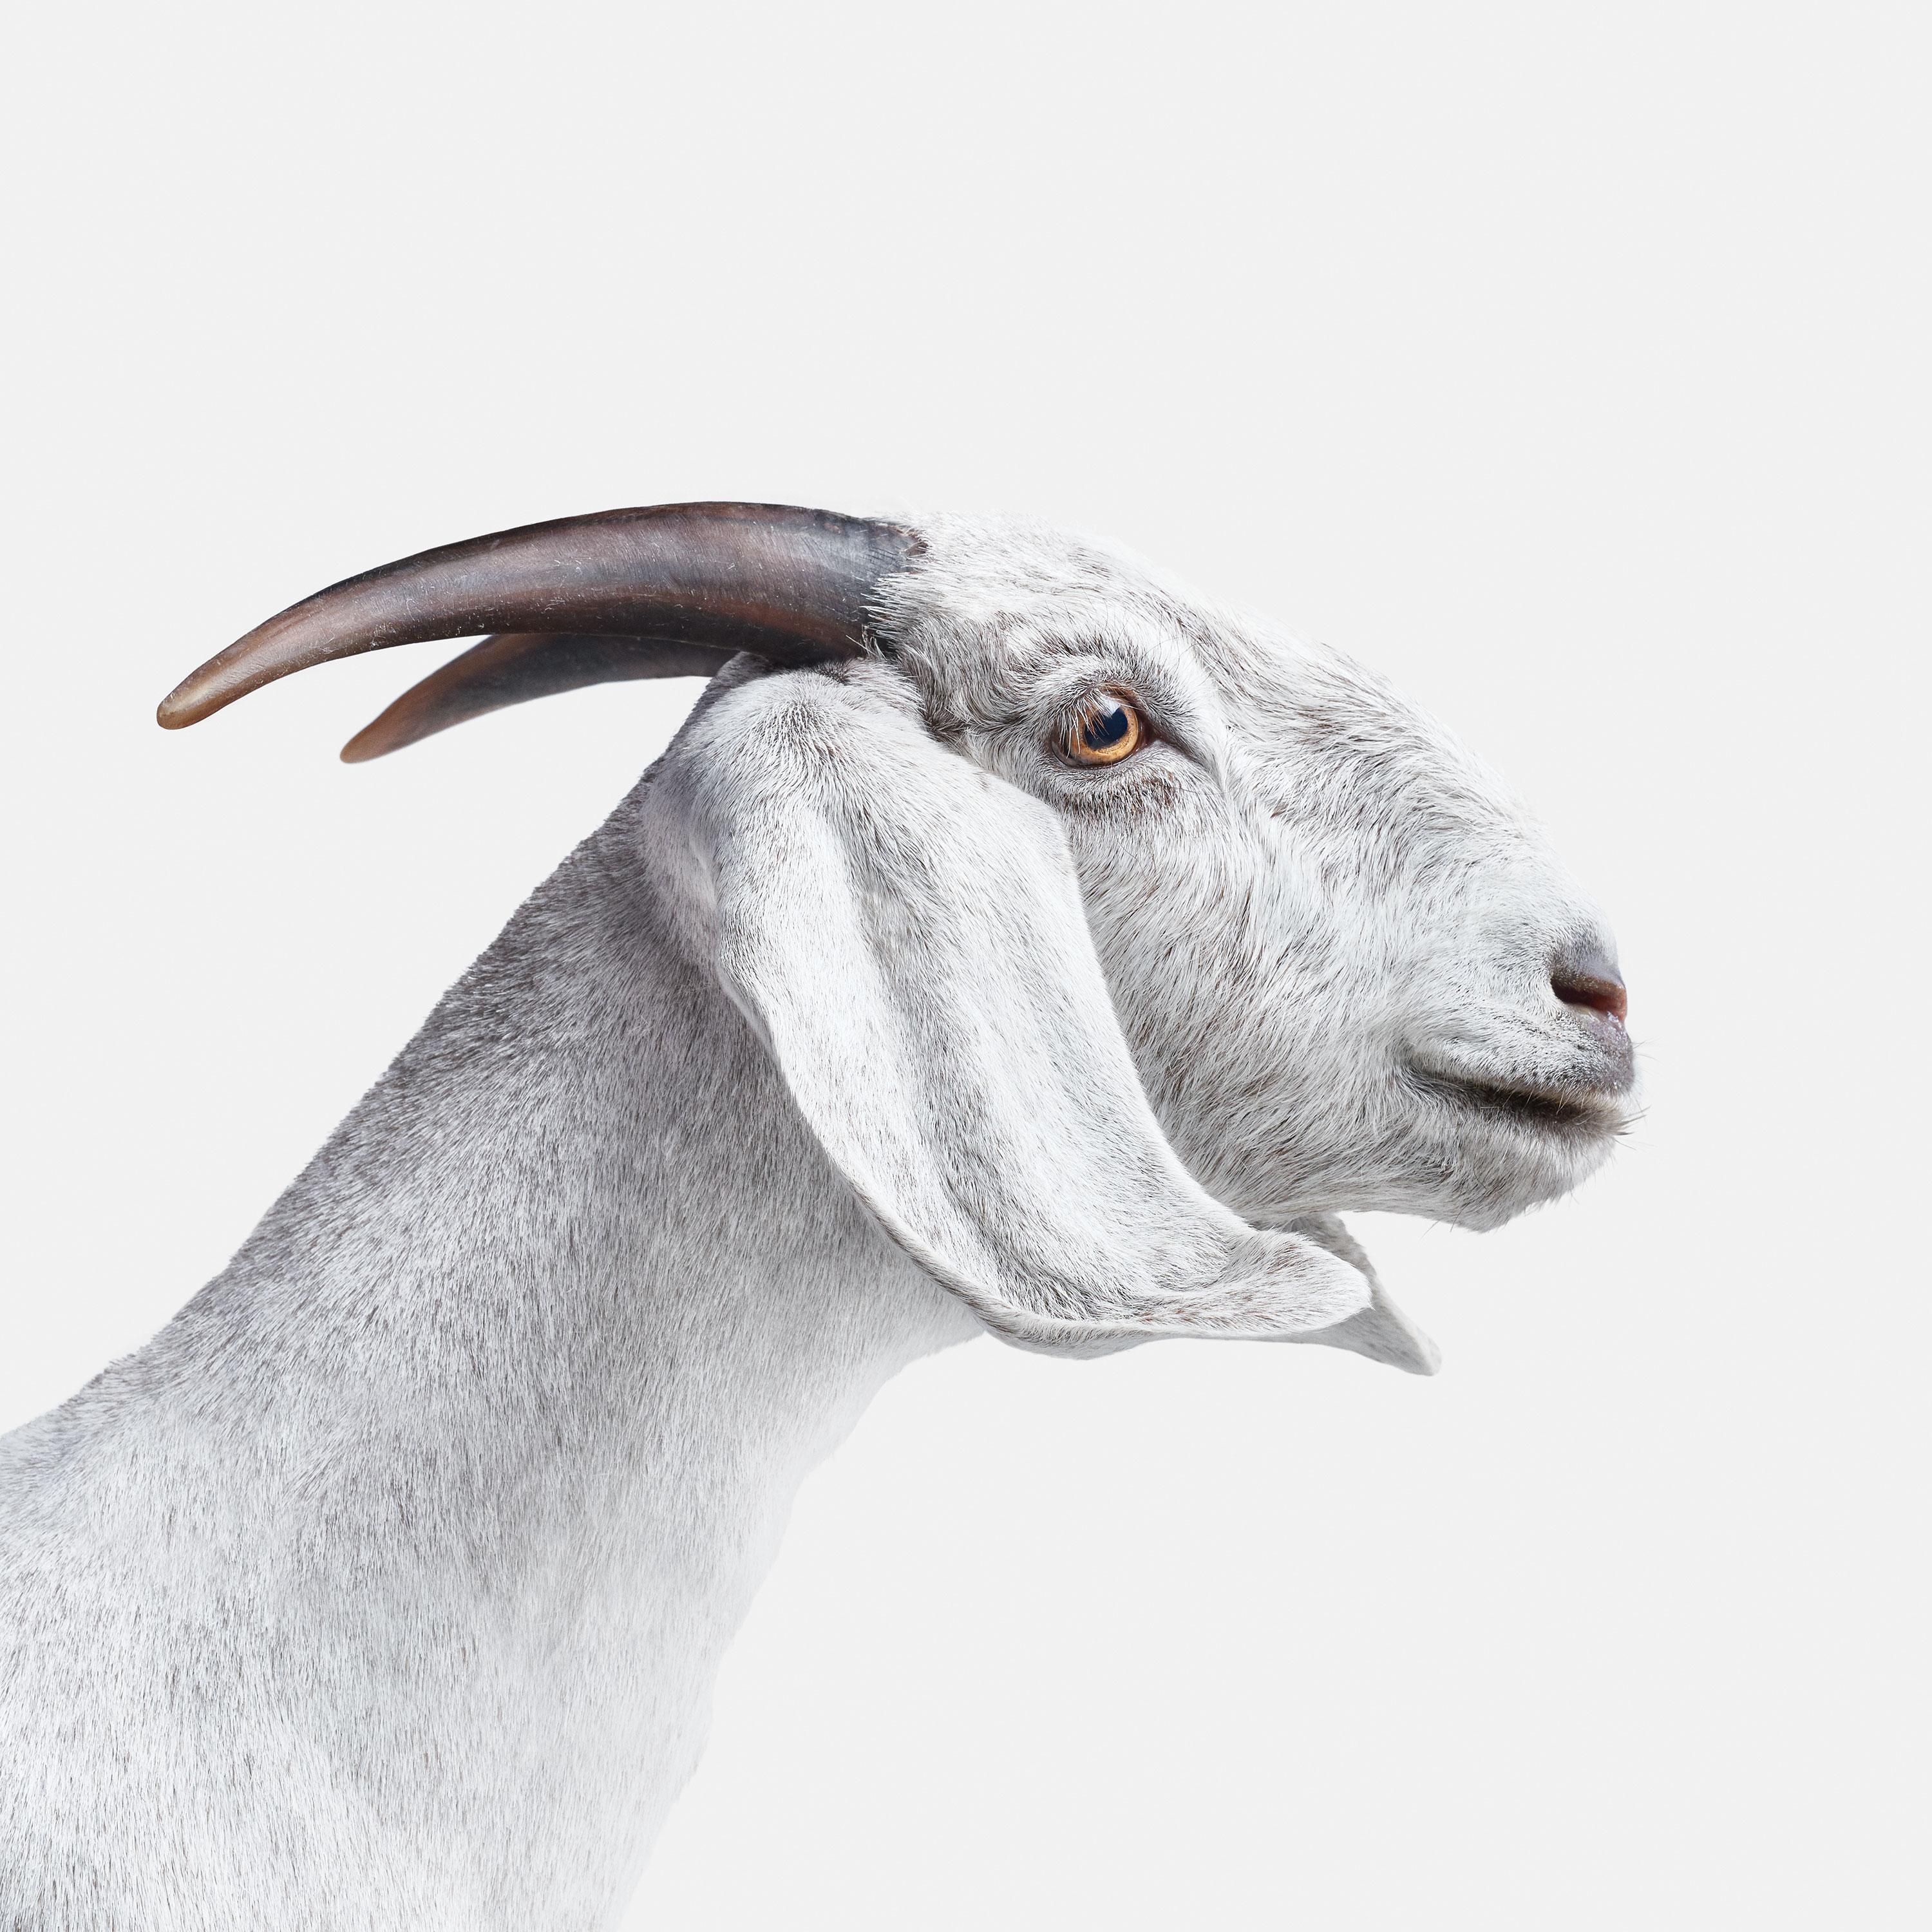 Randal Ford Animal Print - White Goat No. 1 (32" x 32")